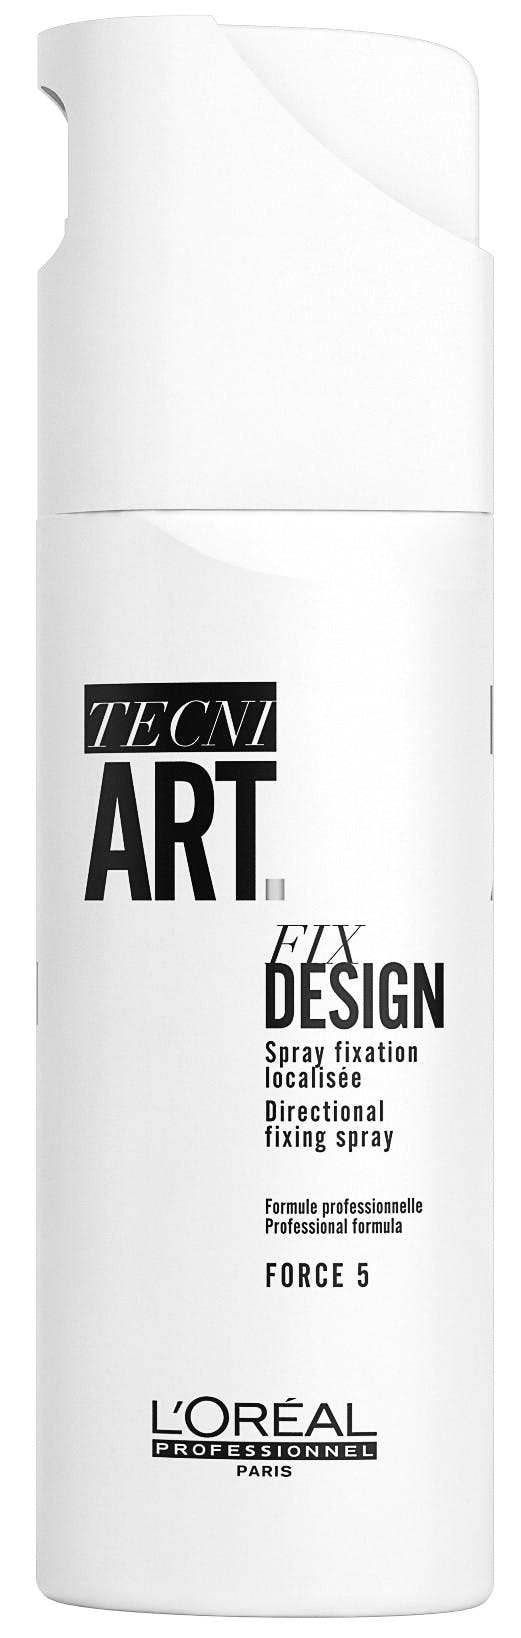 Tecni. Art - Fix Design_logo